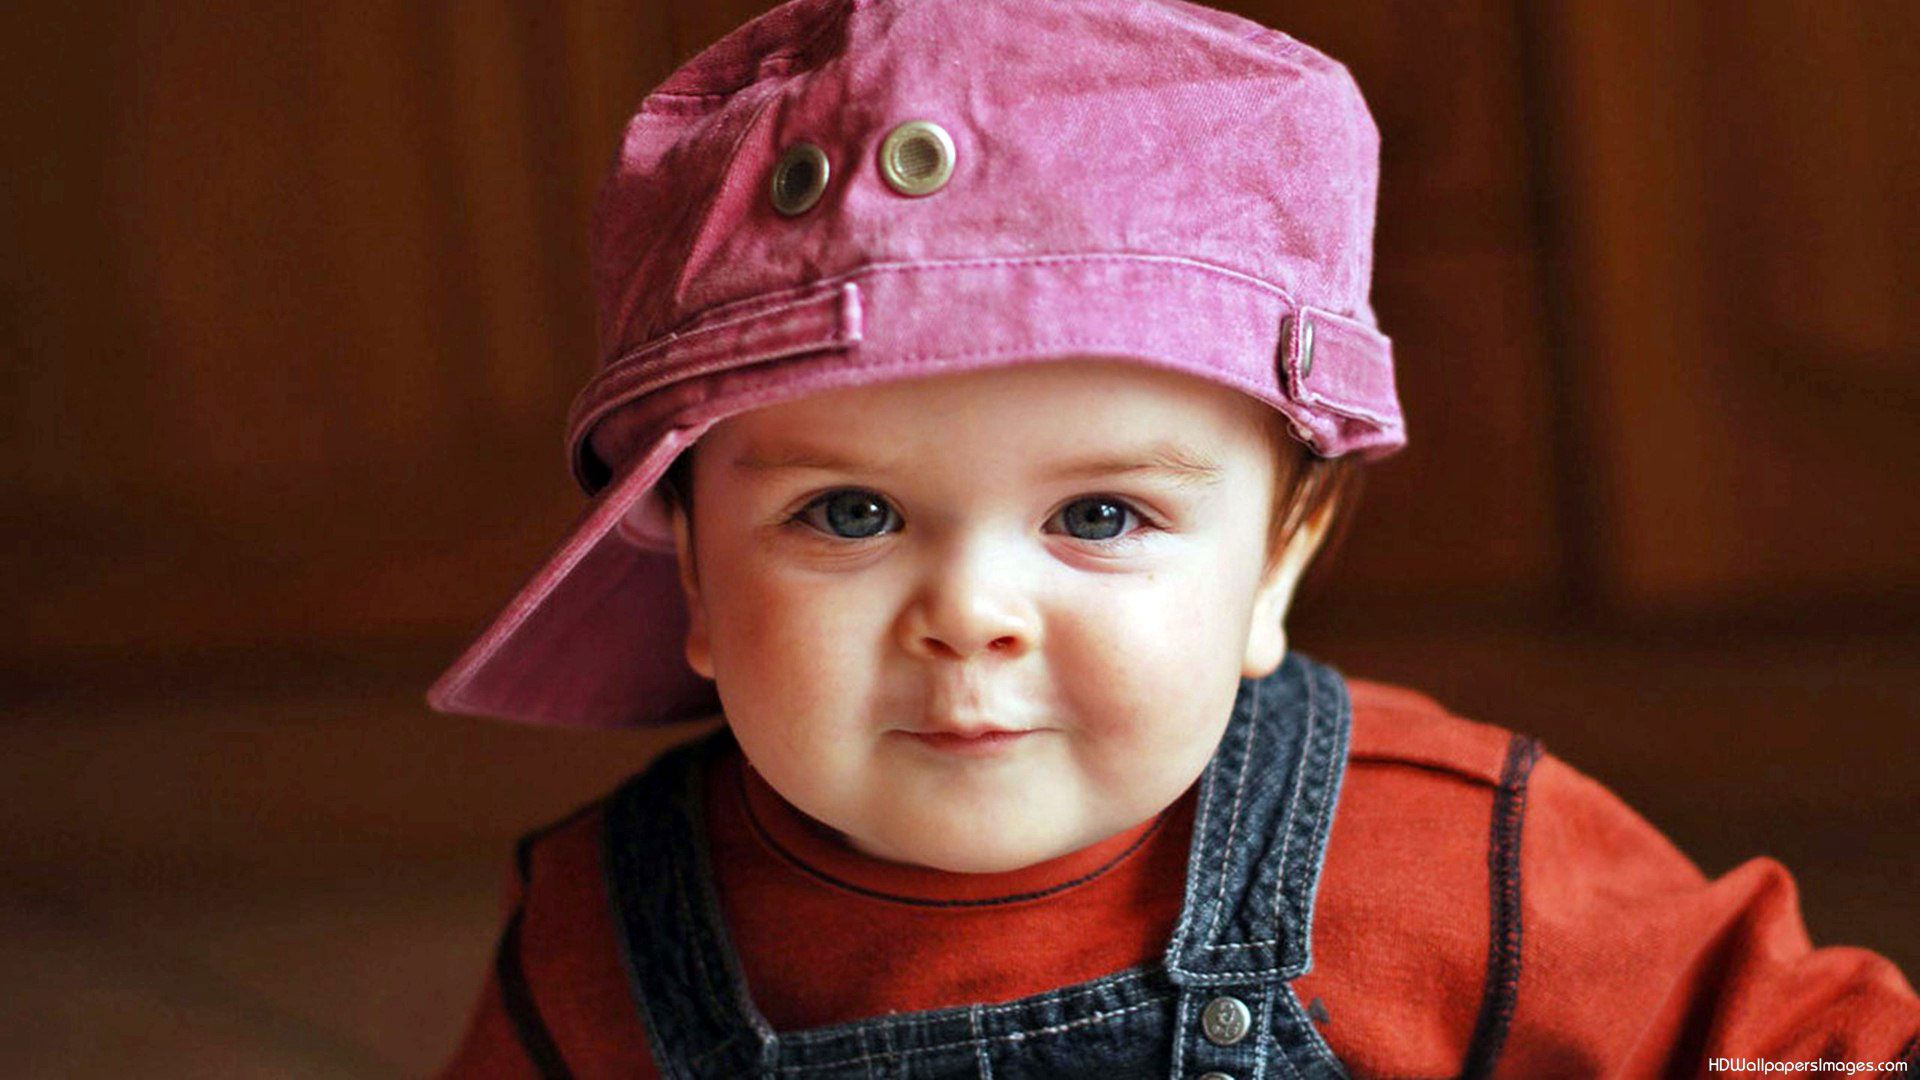 Baby Little Boy Cute Cap Wallpaper 1080p HD Image